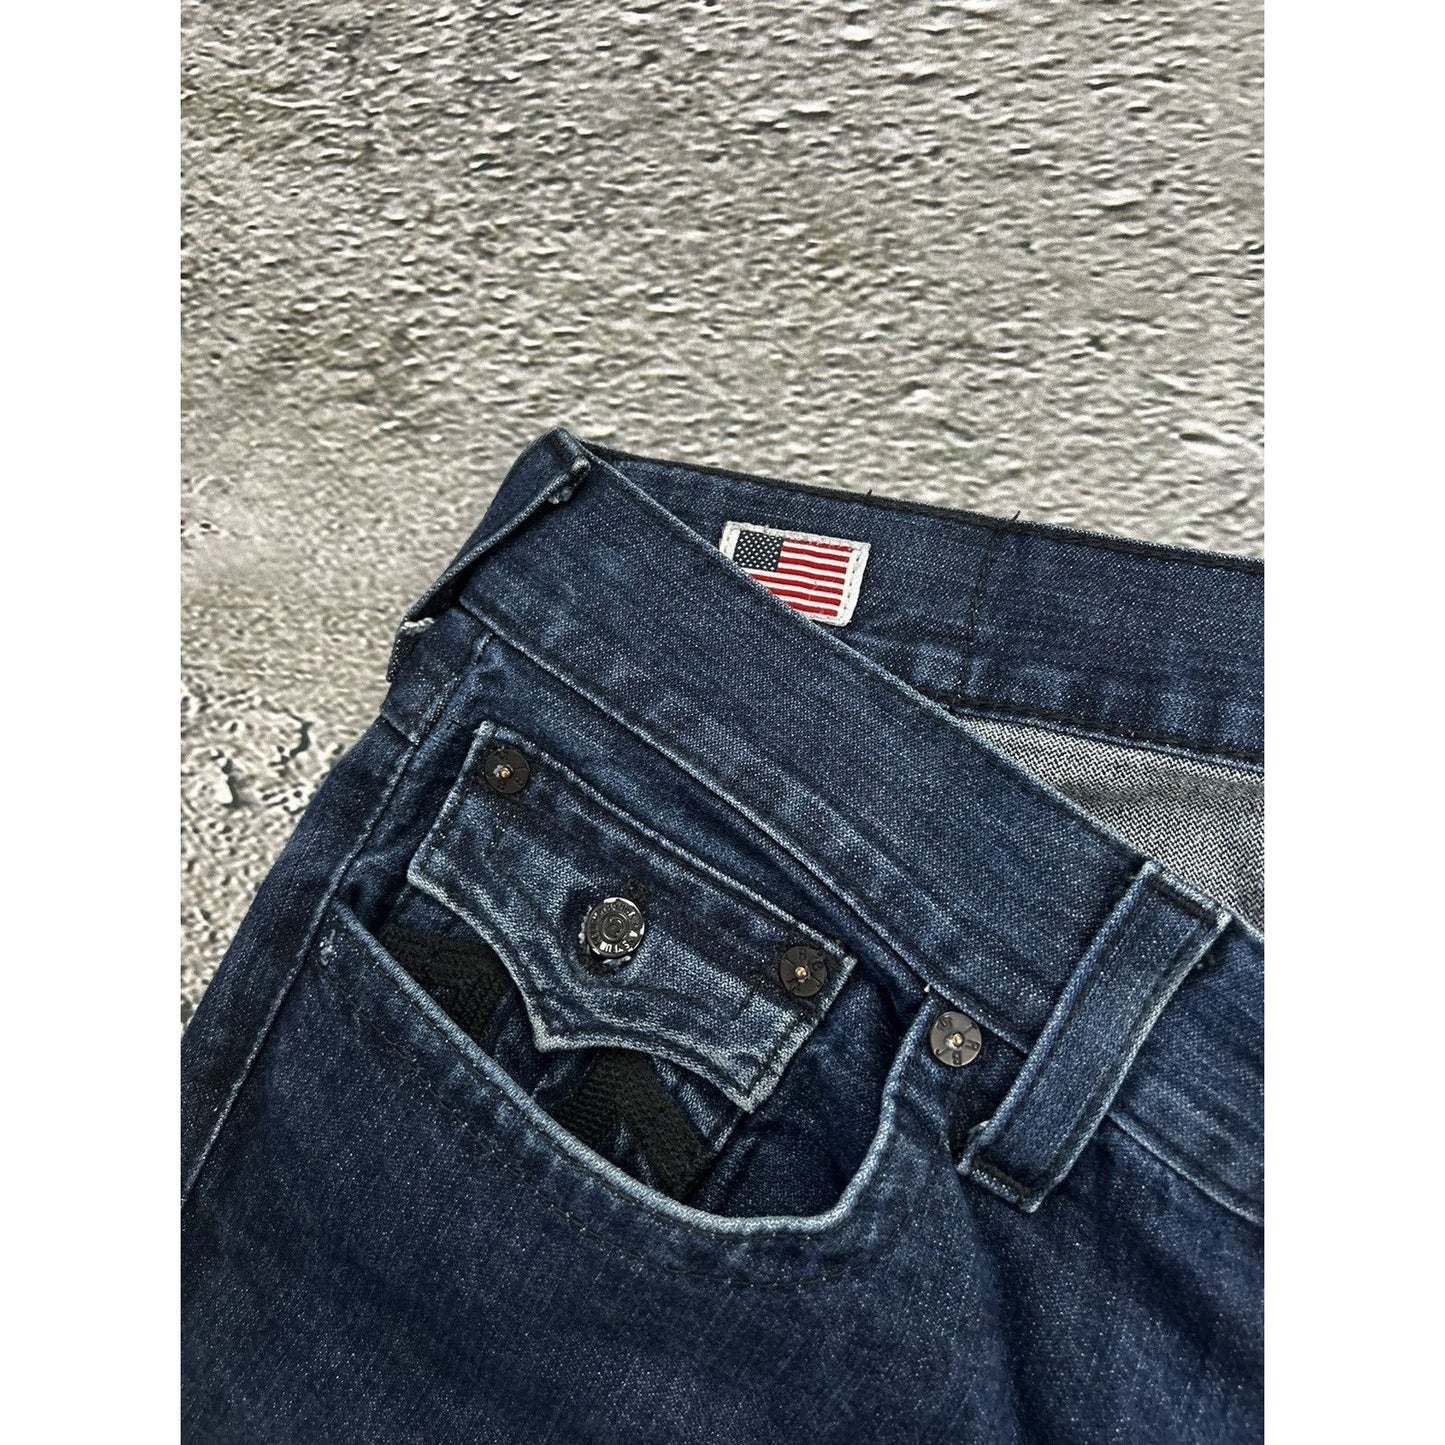 True Religion navy jeans black thick stitching Y2K